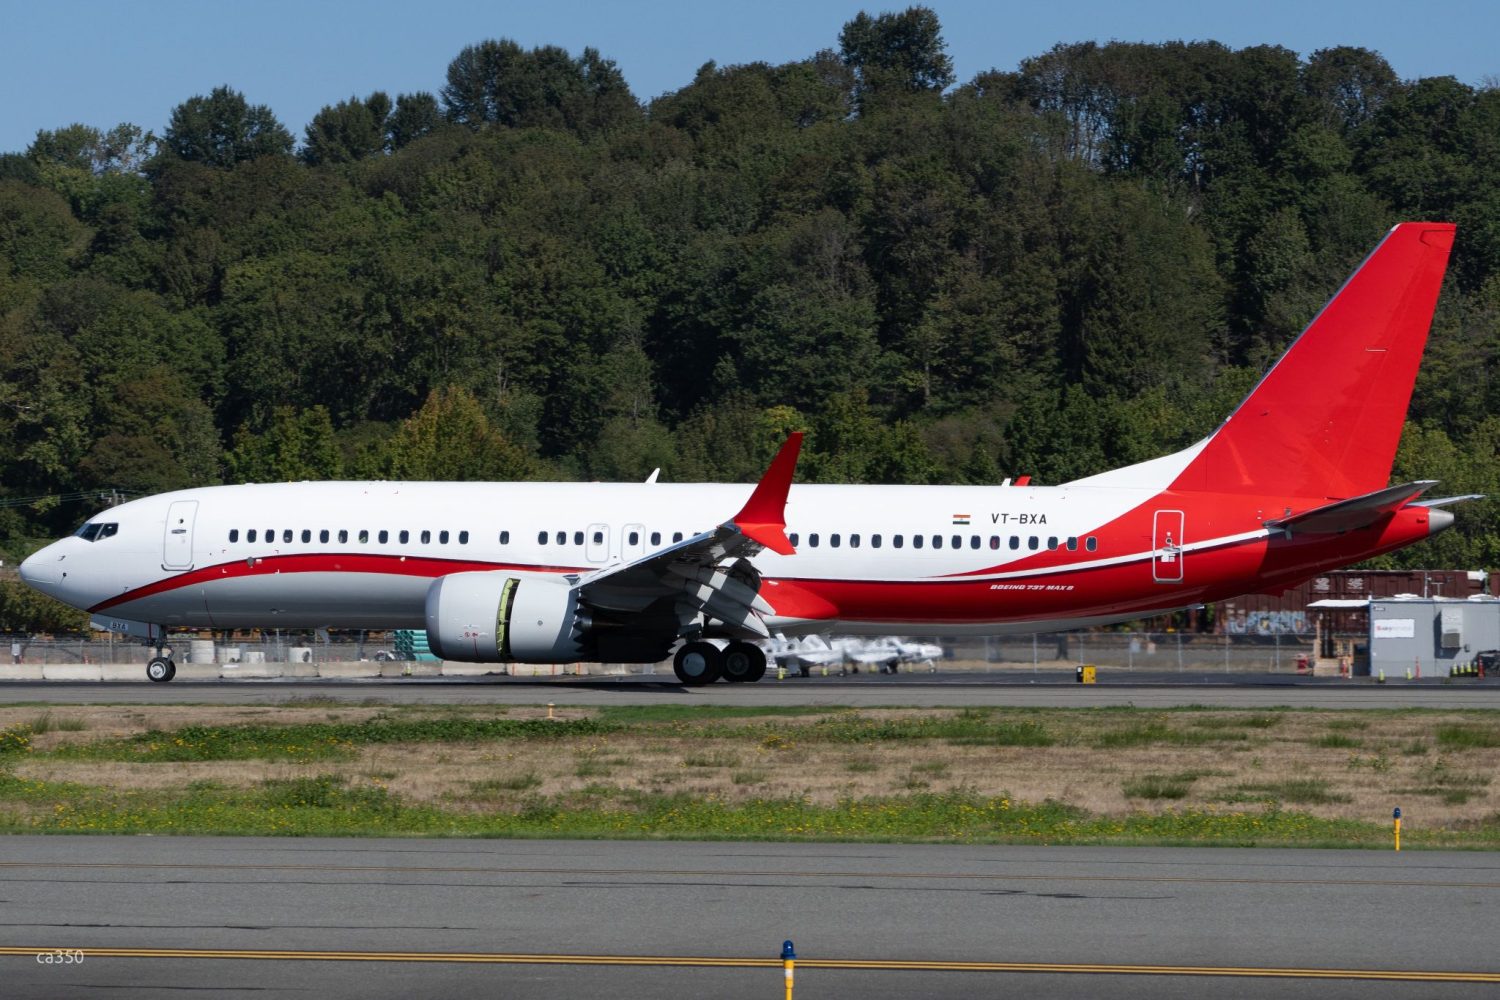 Preberanie Boeingu 737MAX spoločnosťou Air India Express (c)twitter.com/bfi_watch_ca350